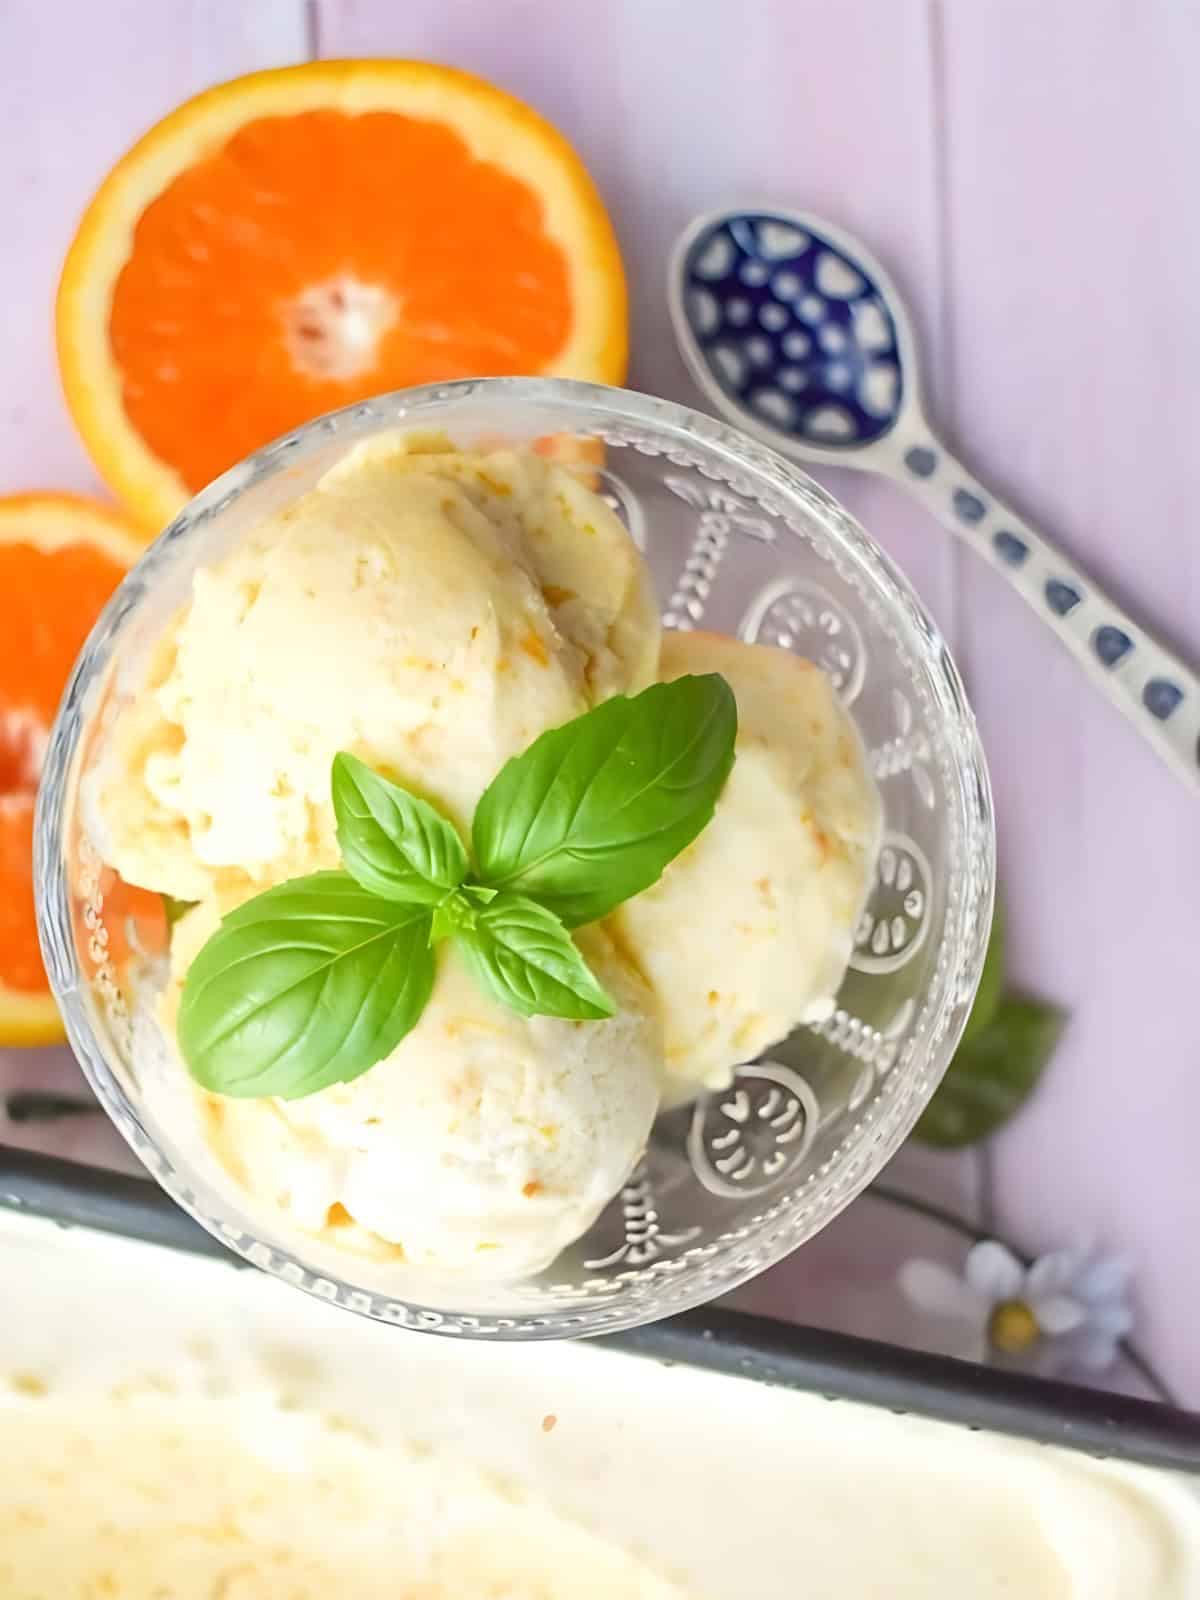 Orange ice cream topped with fresh basil on top, next to a sliced orange.